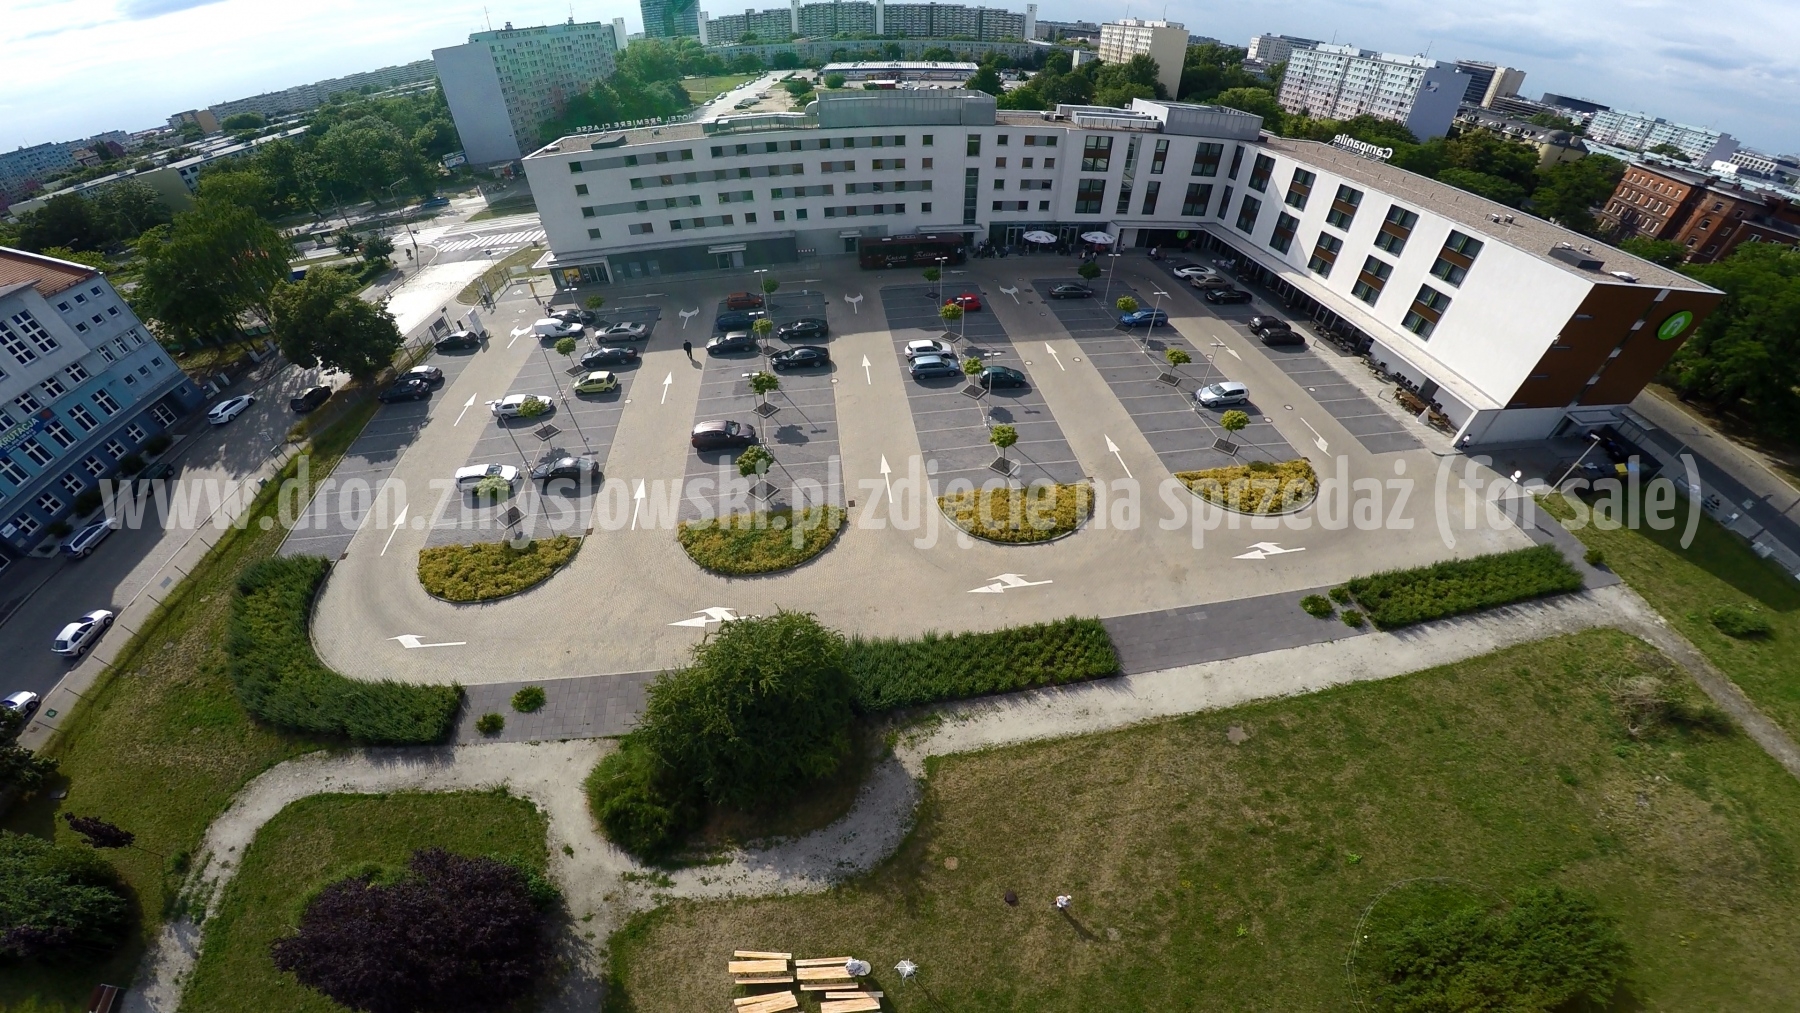 2015-07-12-Wroclaw-dzien-2-dron-nad-hotelem-Campanile-008